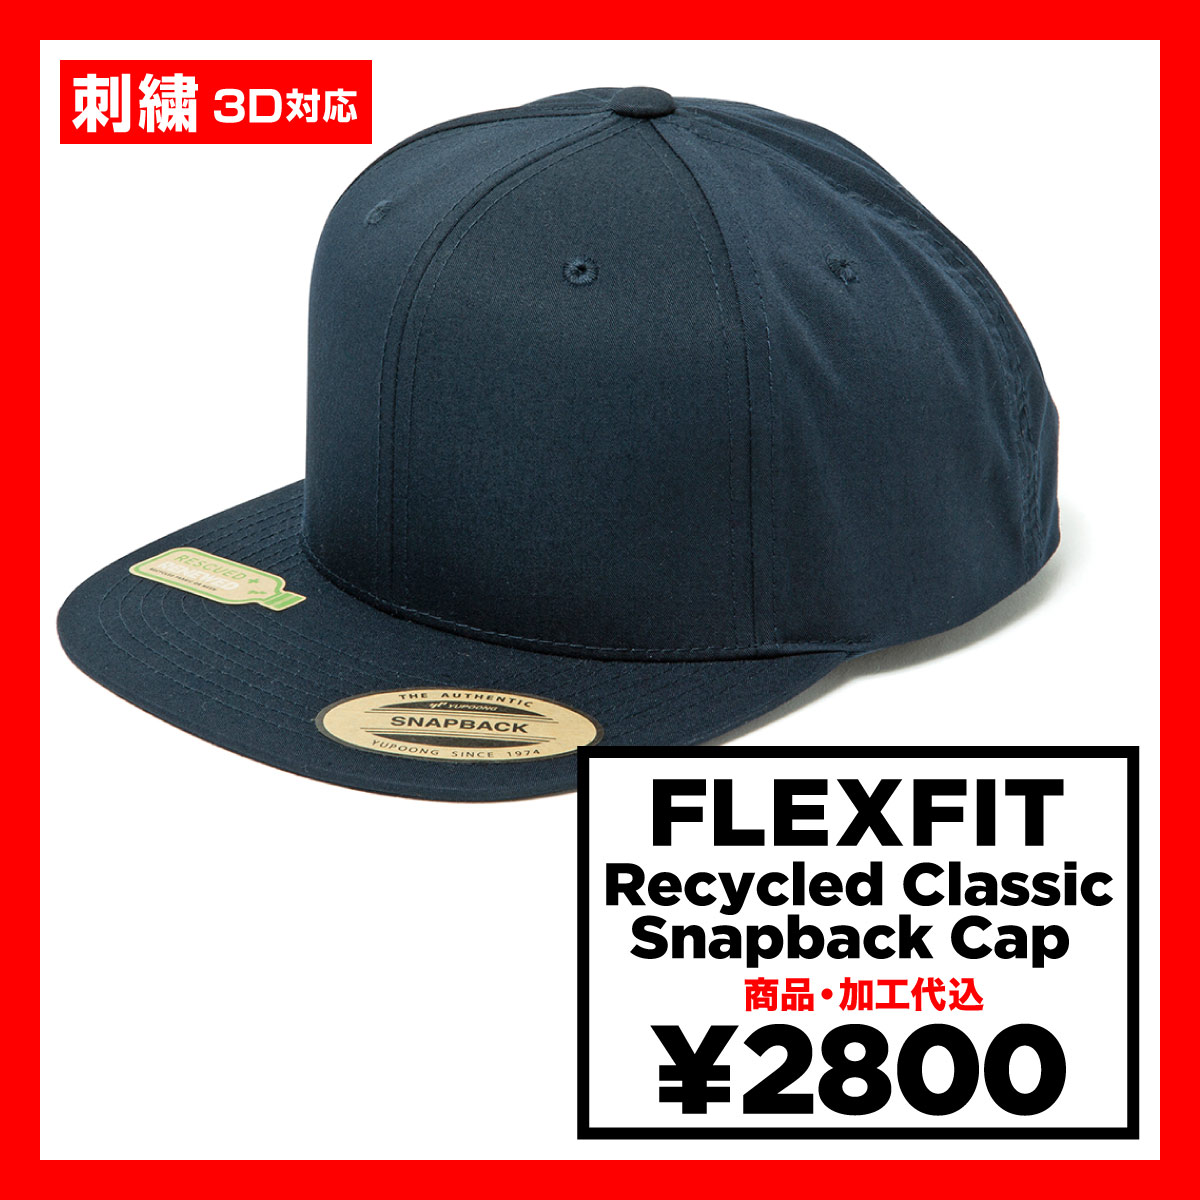 FLEXFIT フレックスフィット Recycled Classic Snapback Cap (品番FL6089MR)